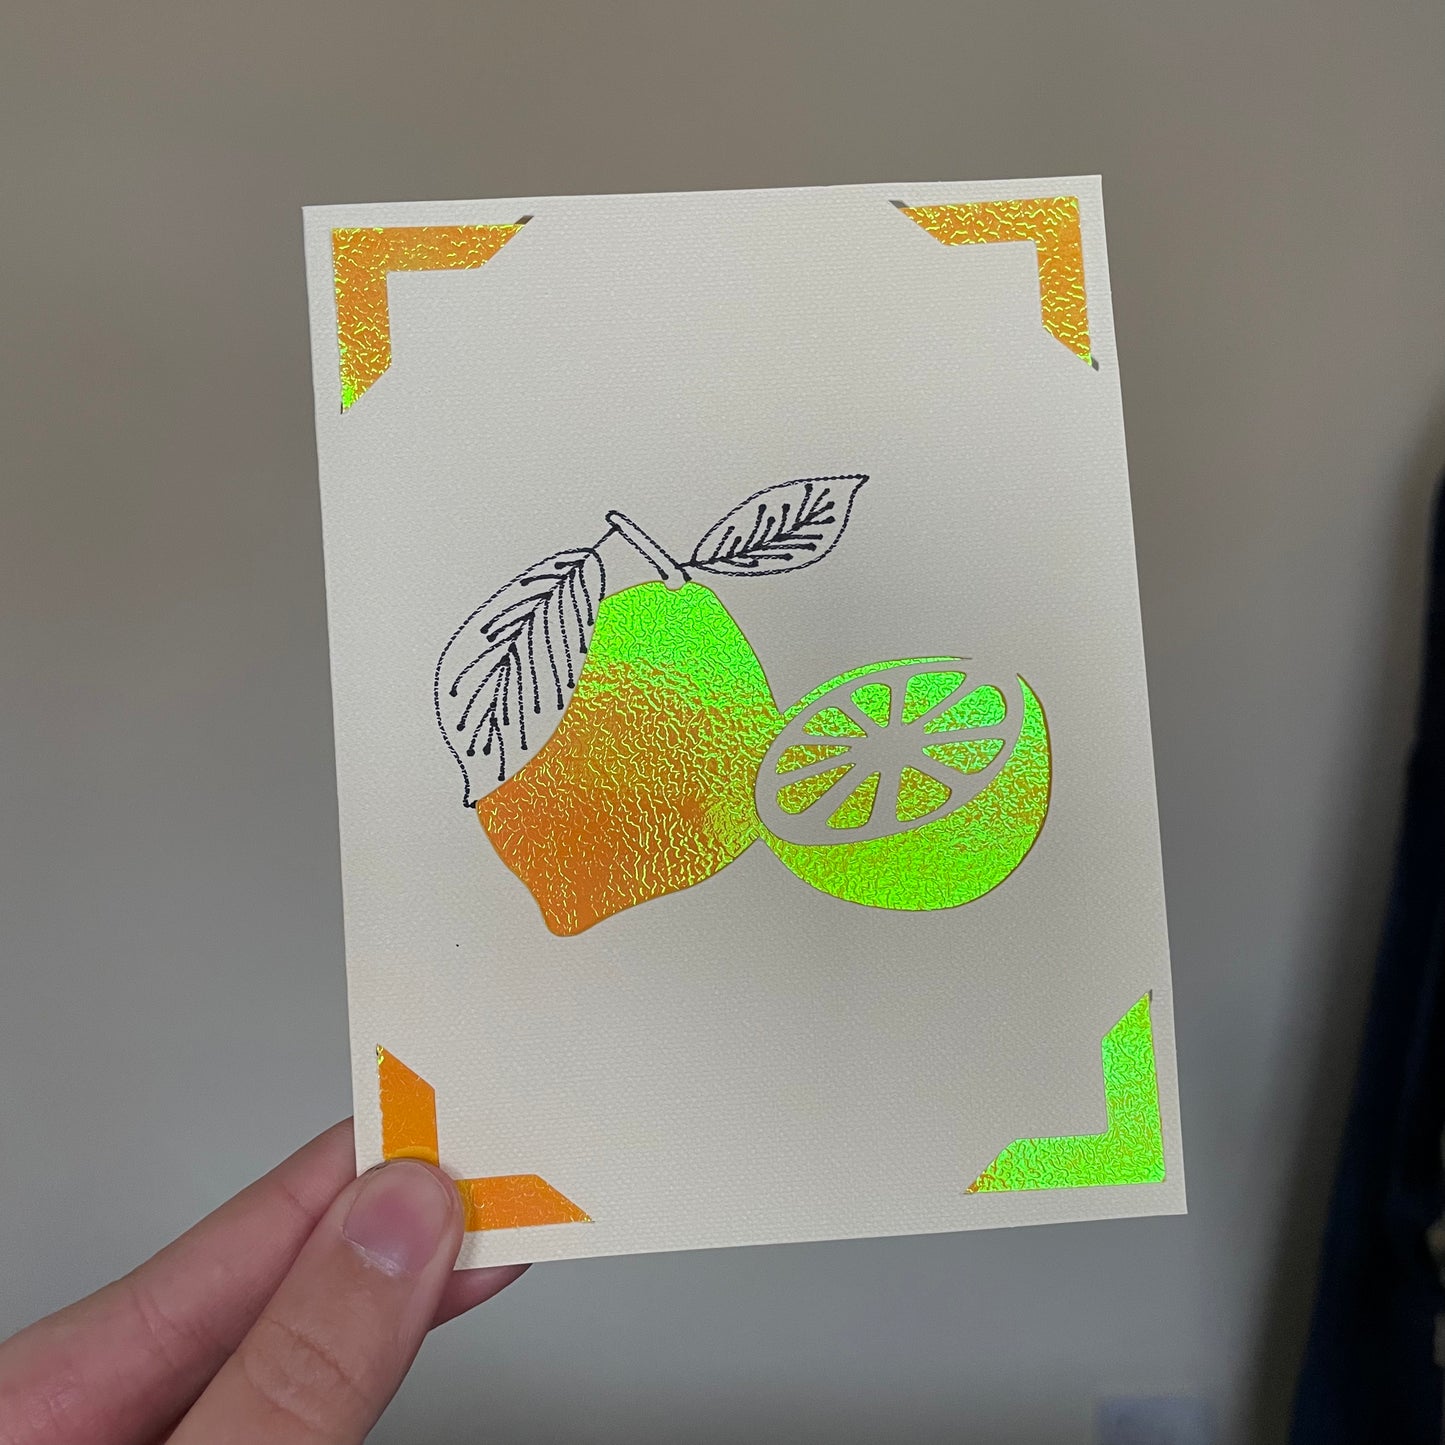 Handmade Card - Citrus